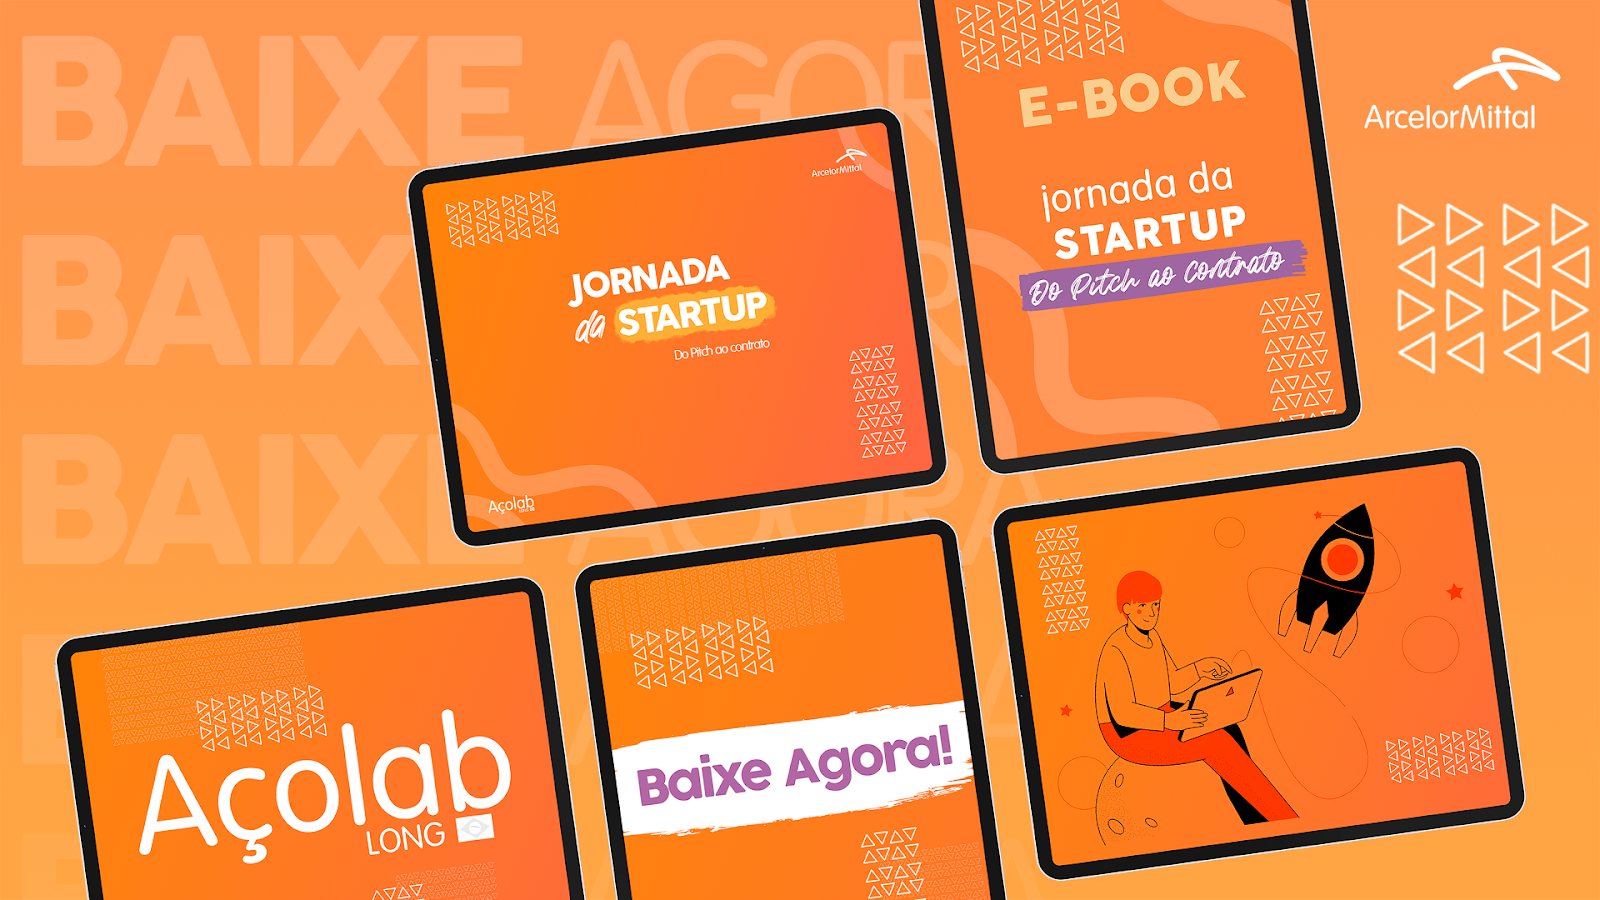 e-book jornada da startup